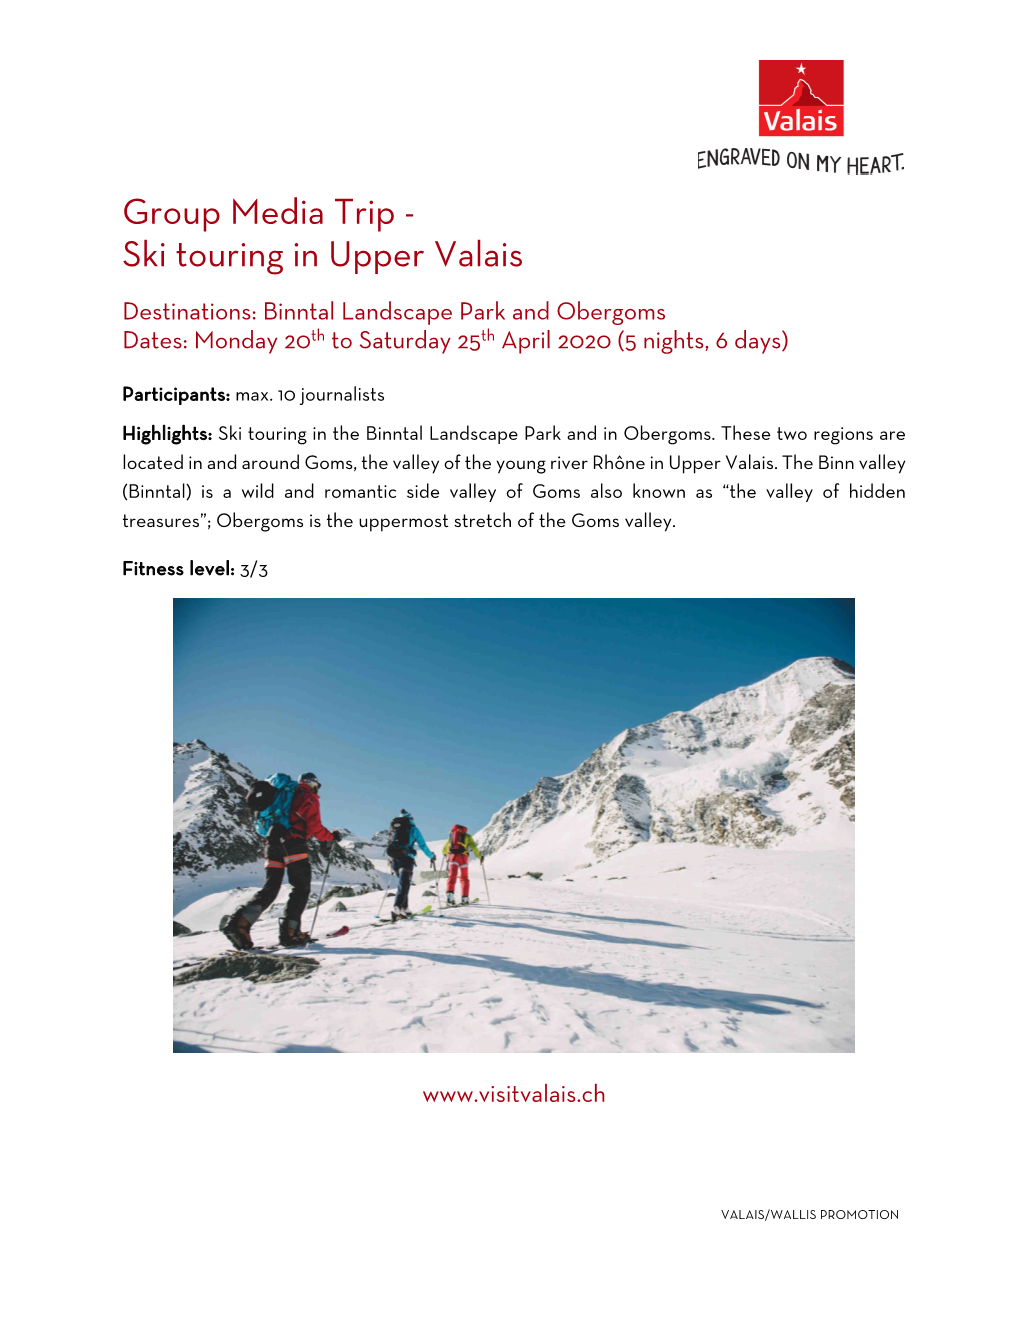 Ski Touring in Upper Valais